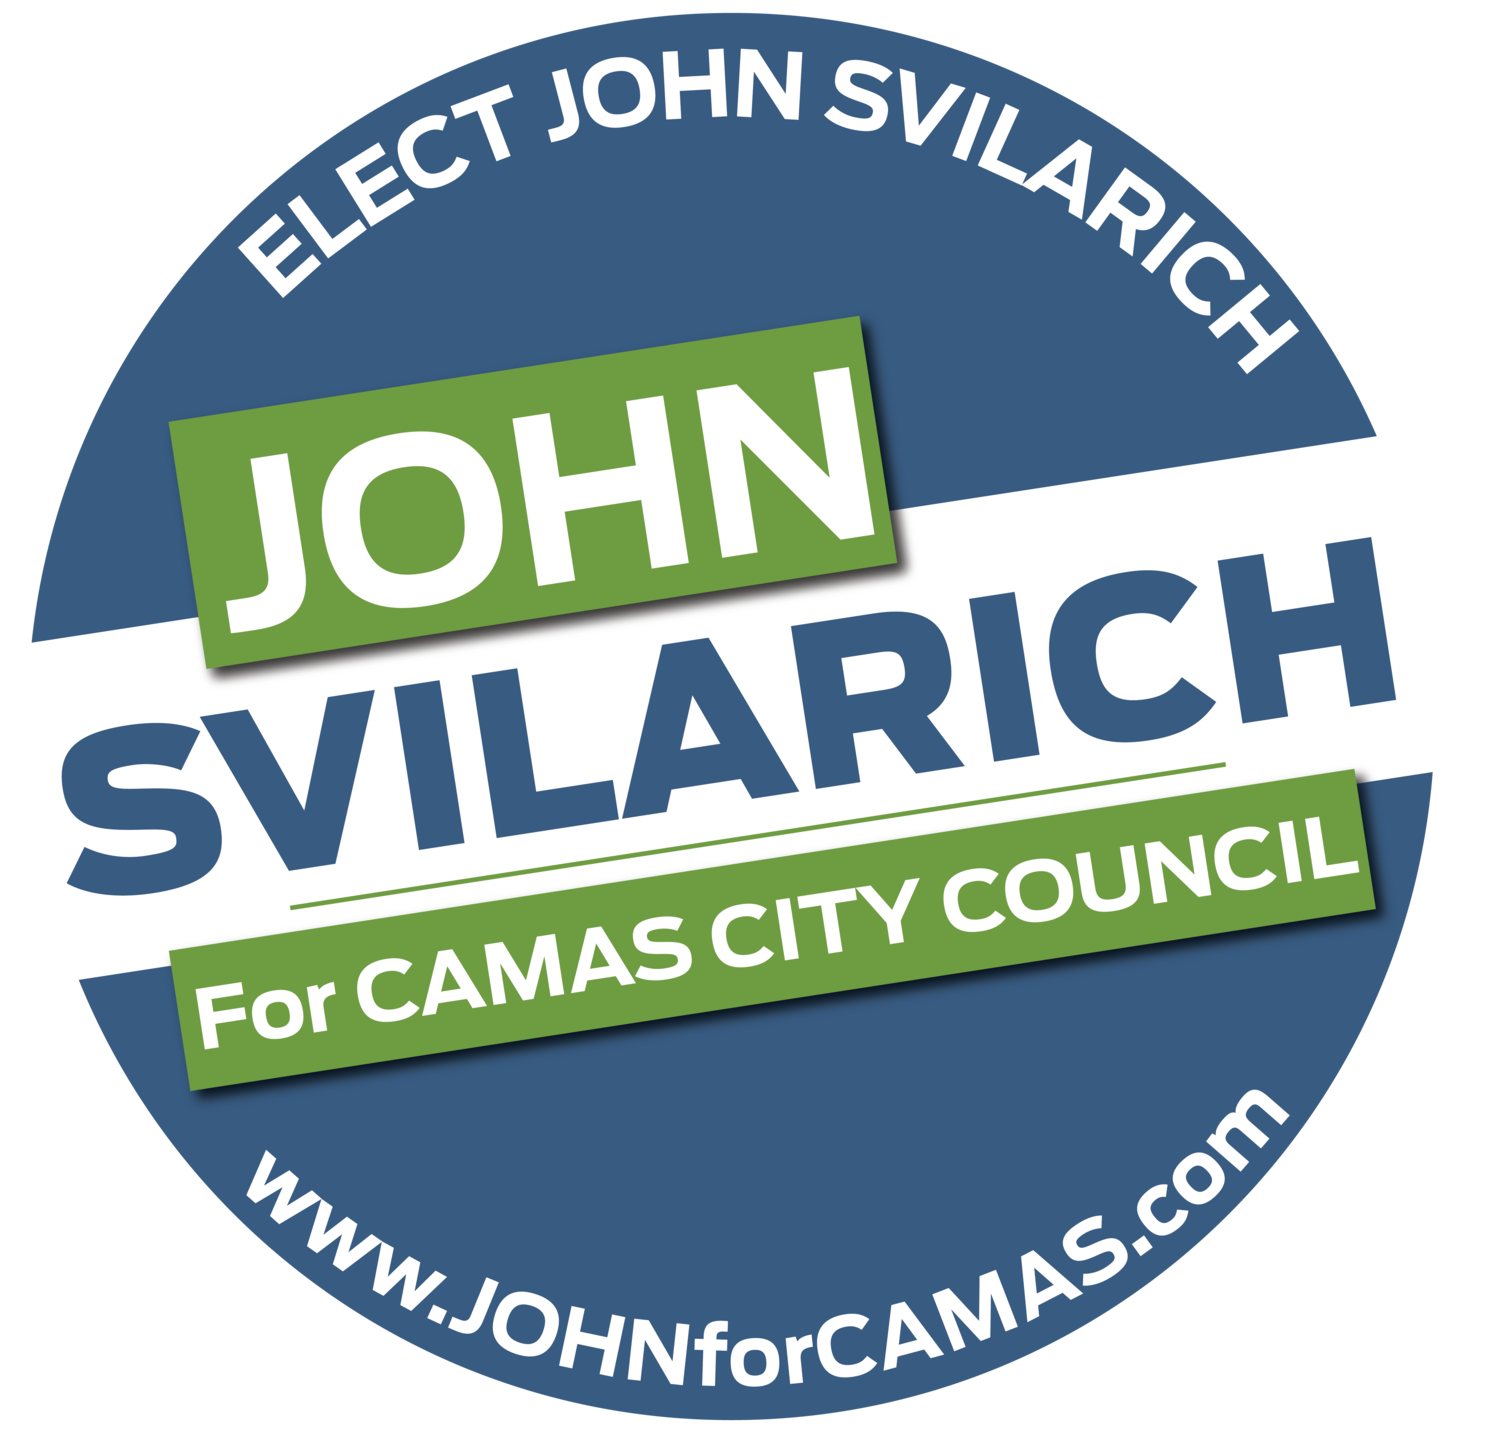 John Svilarich for Camas City Council